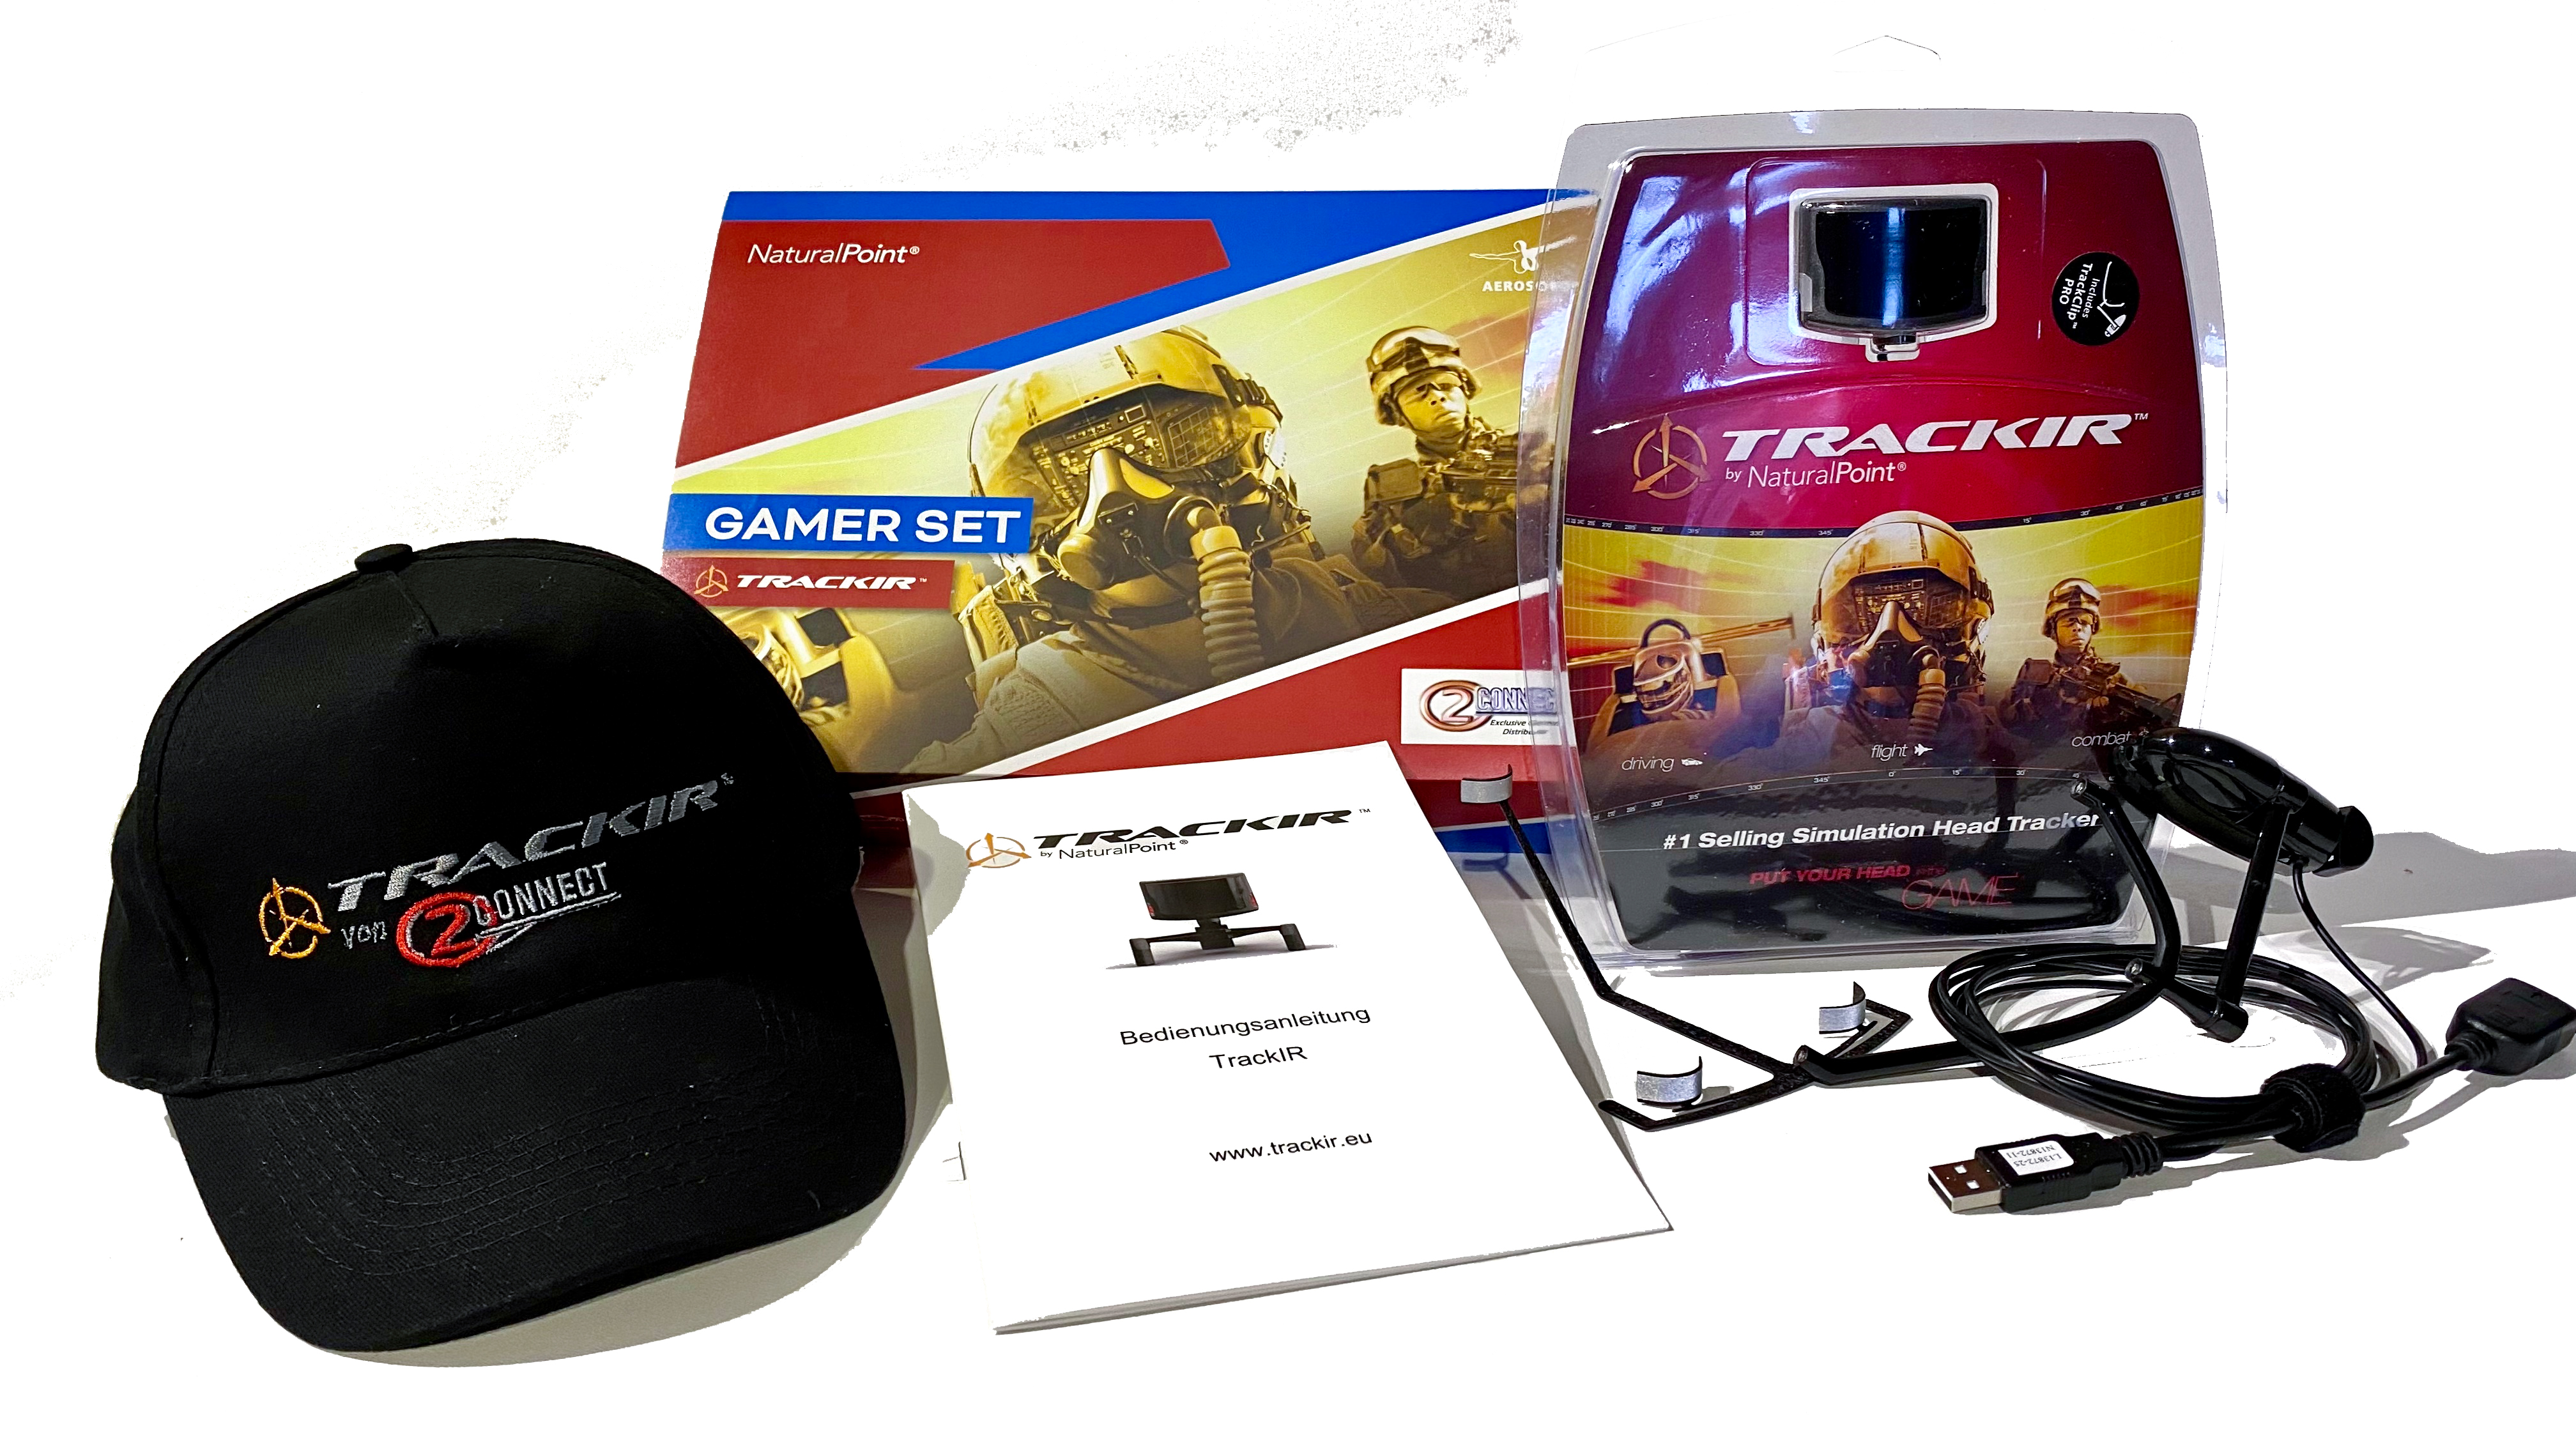 TrackIR :: Premium head tracking Shop für pc-games :: Trackir 5 und Trackir  4:PRO - TrackIR 5 Gamer Set in a BOX